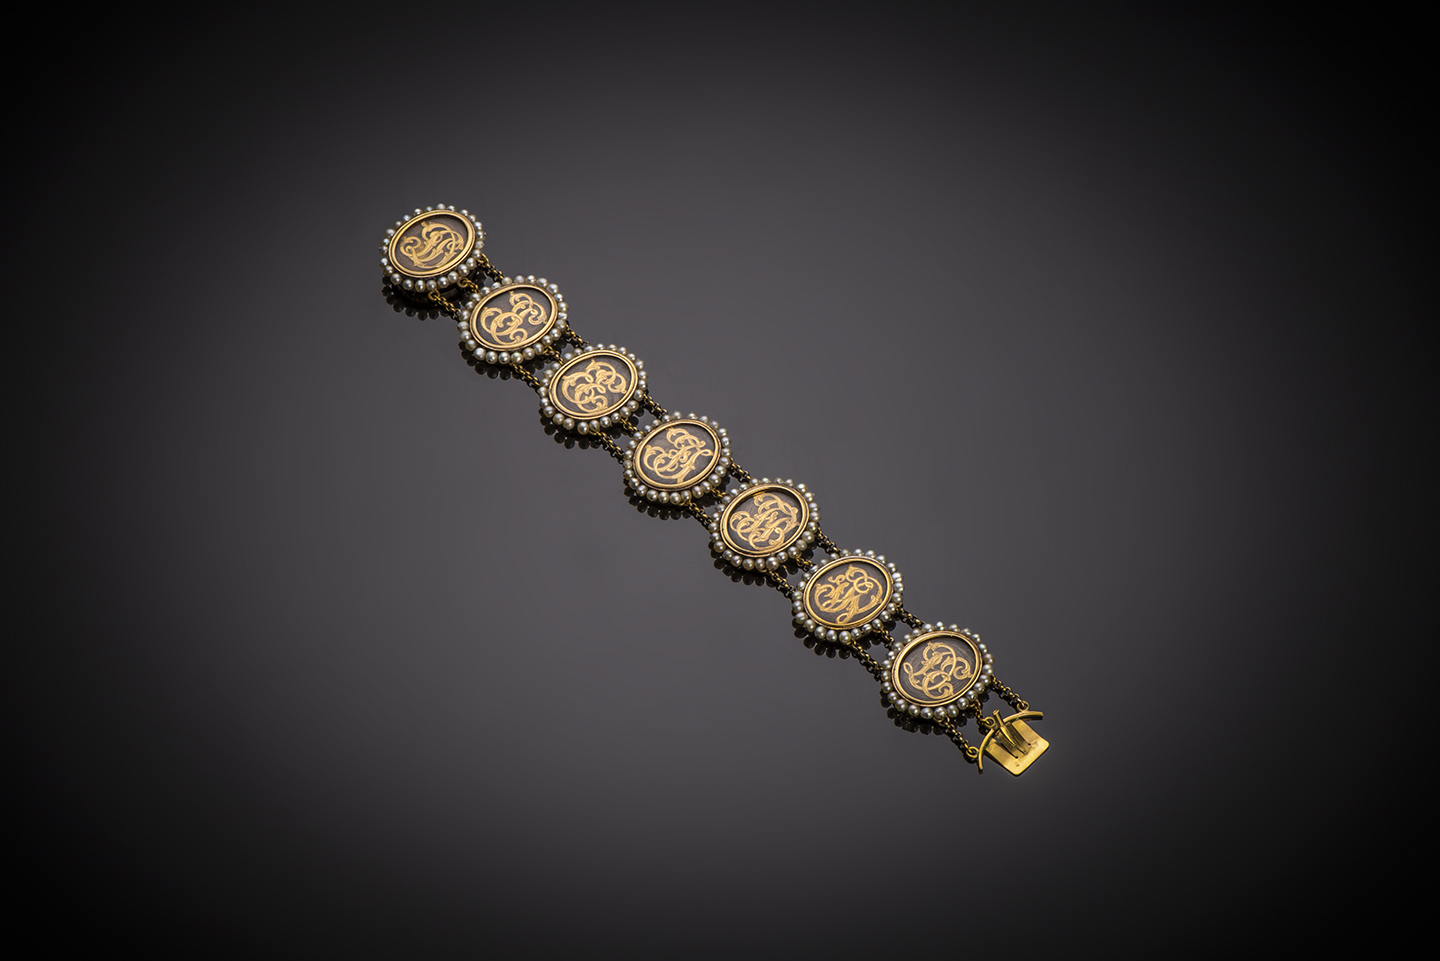 Bracelet circa 1840-1